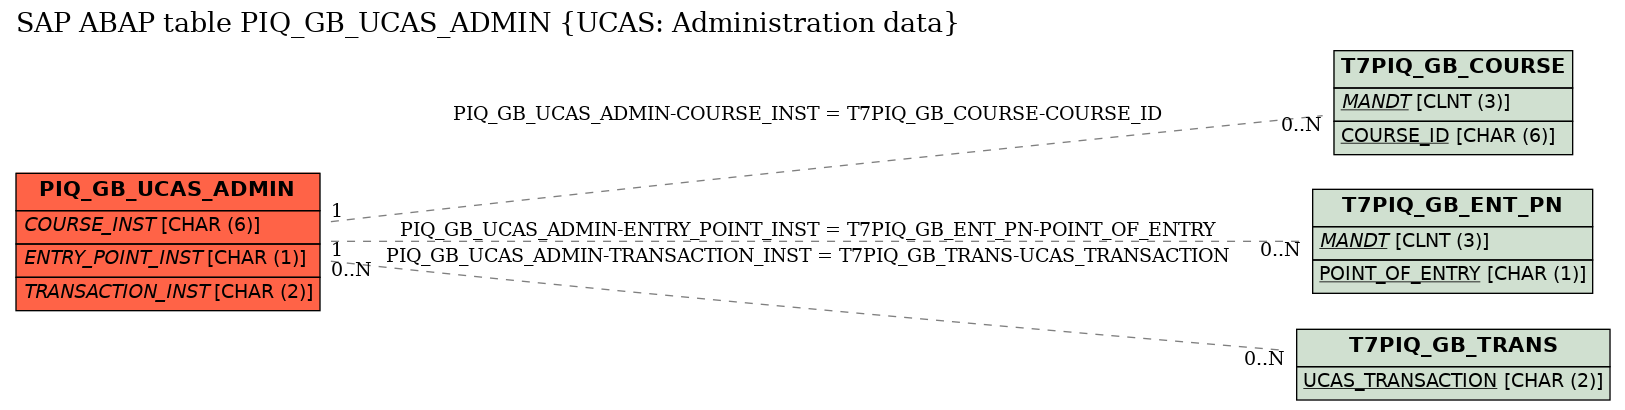 E-R Diagram for table PIQ_GB_UCAS_ADMIN (UCAS: Administration data)